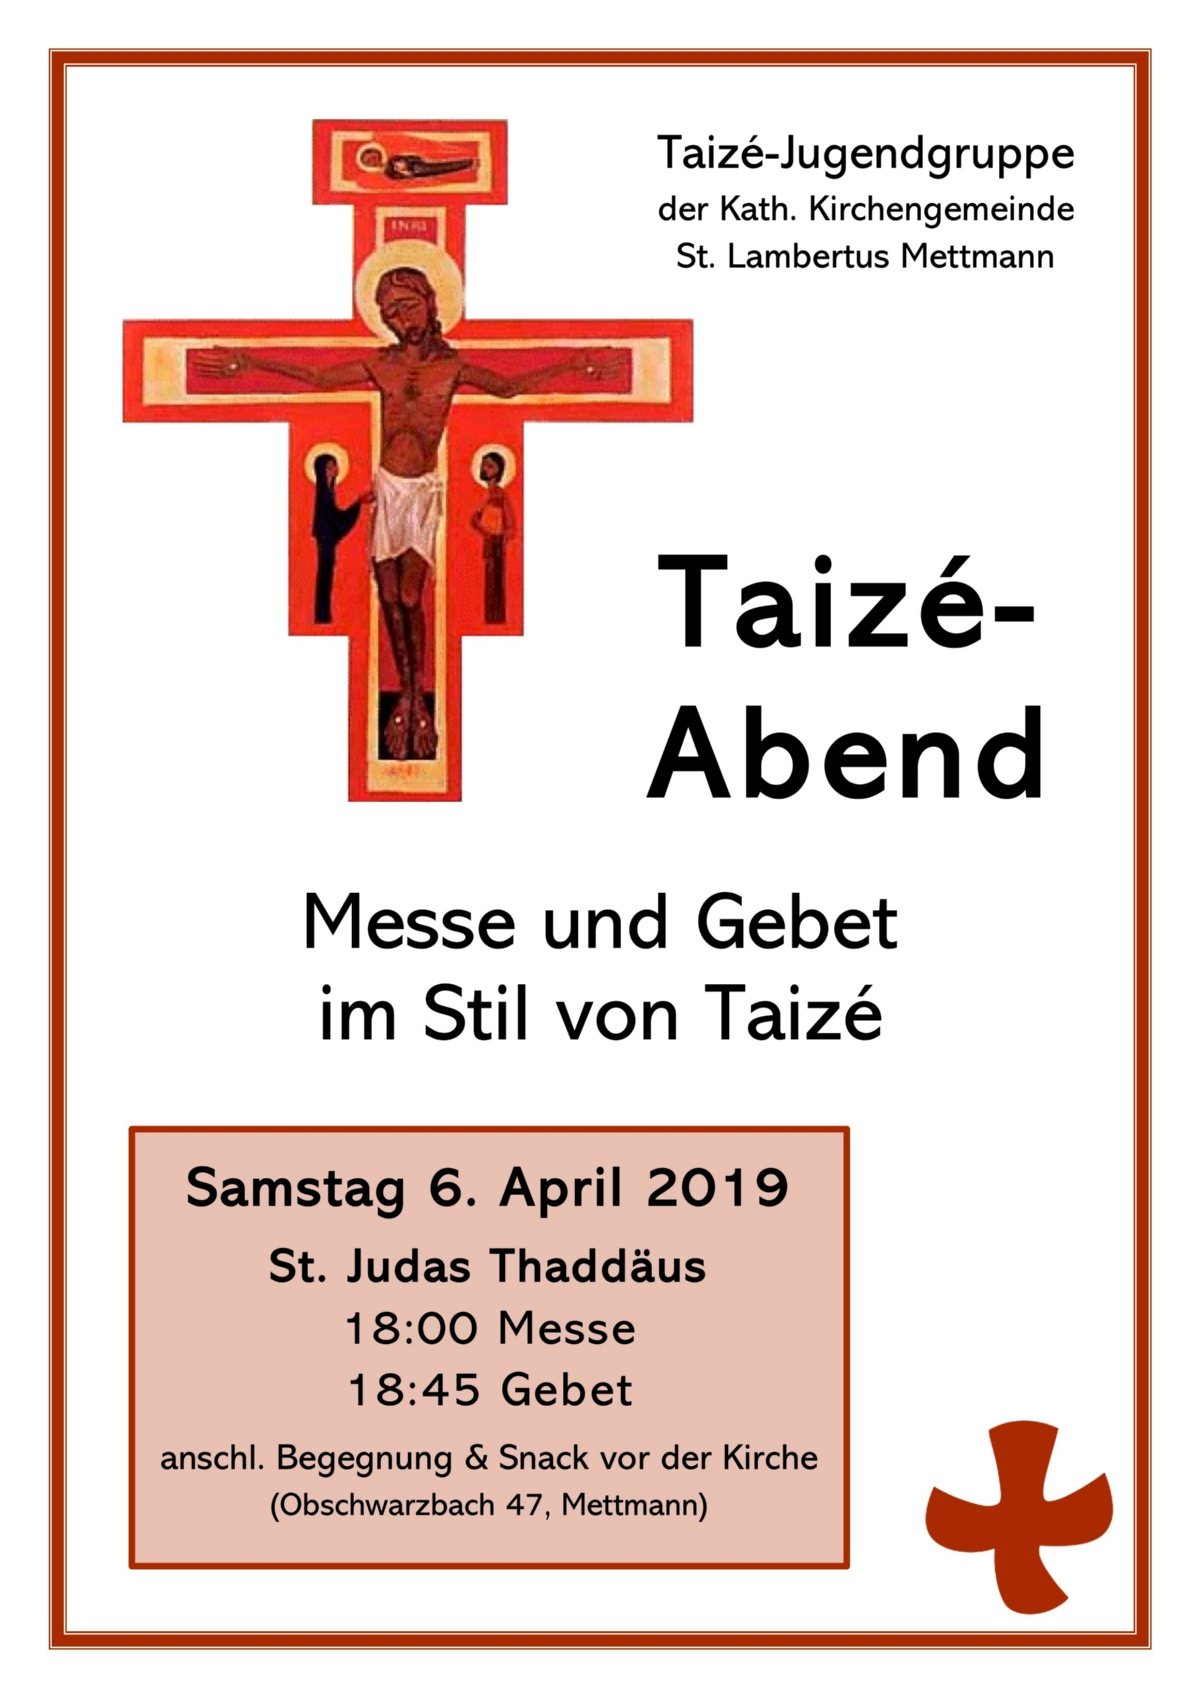 TaizeMesse Plakat 19-04-06 neu (c) Pfarrei St. Lambertus Mettmann